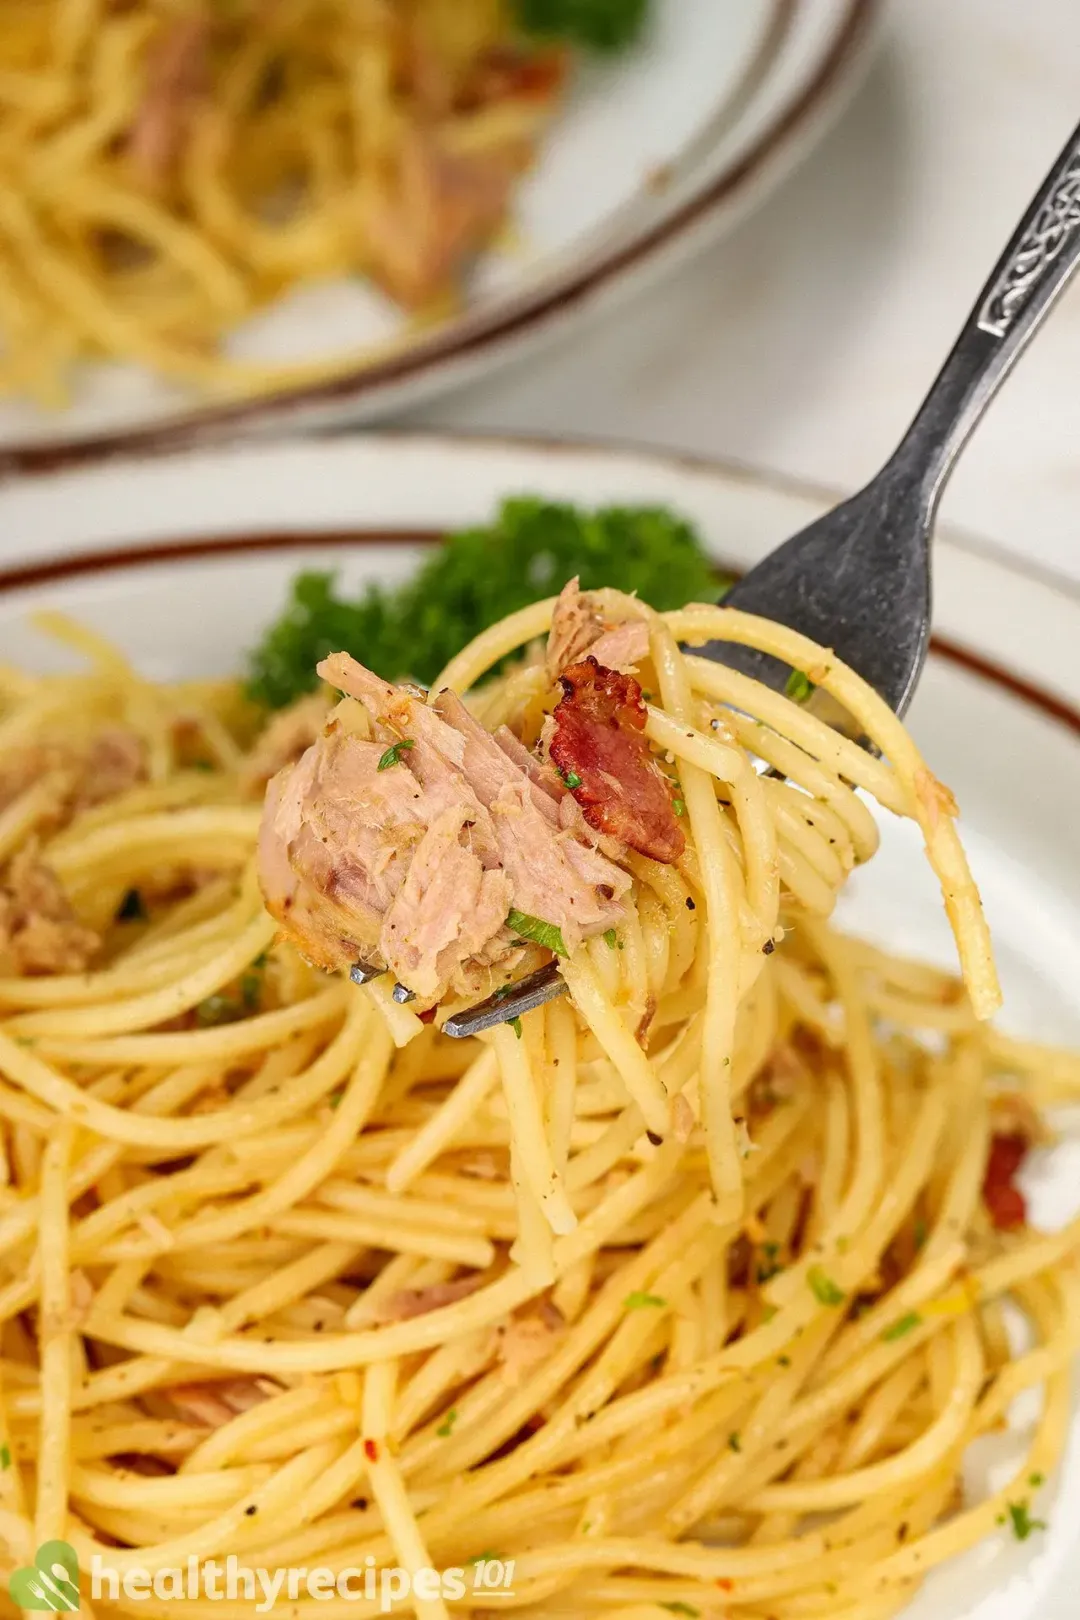 is Tuna Spaghetti Healthy